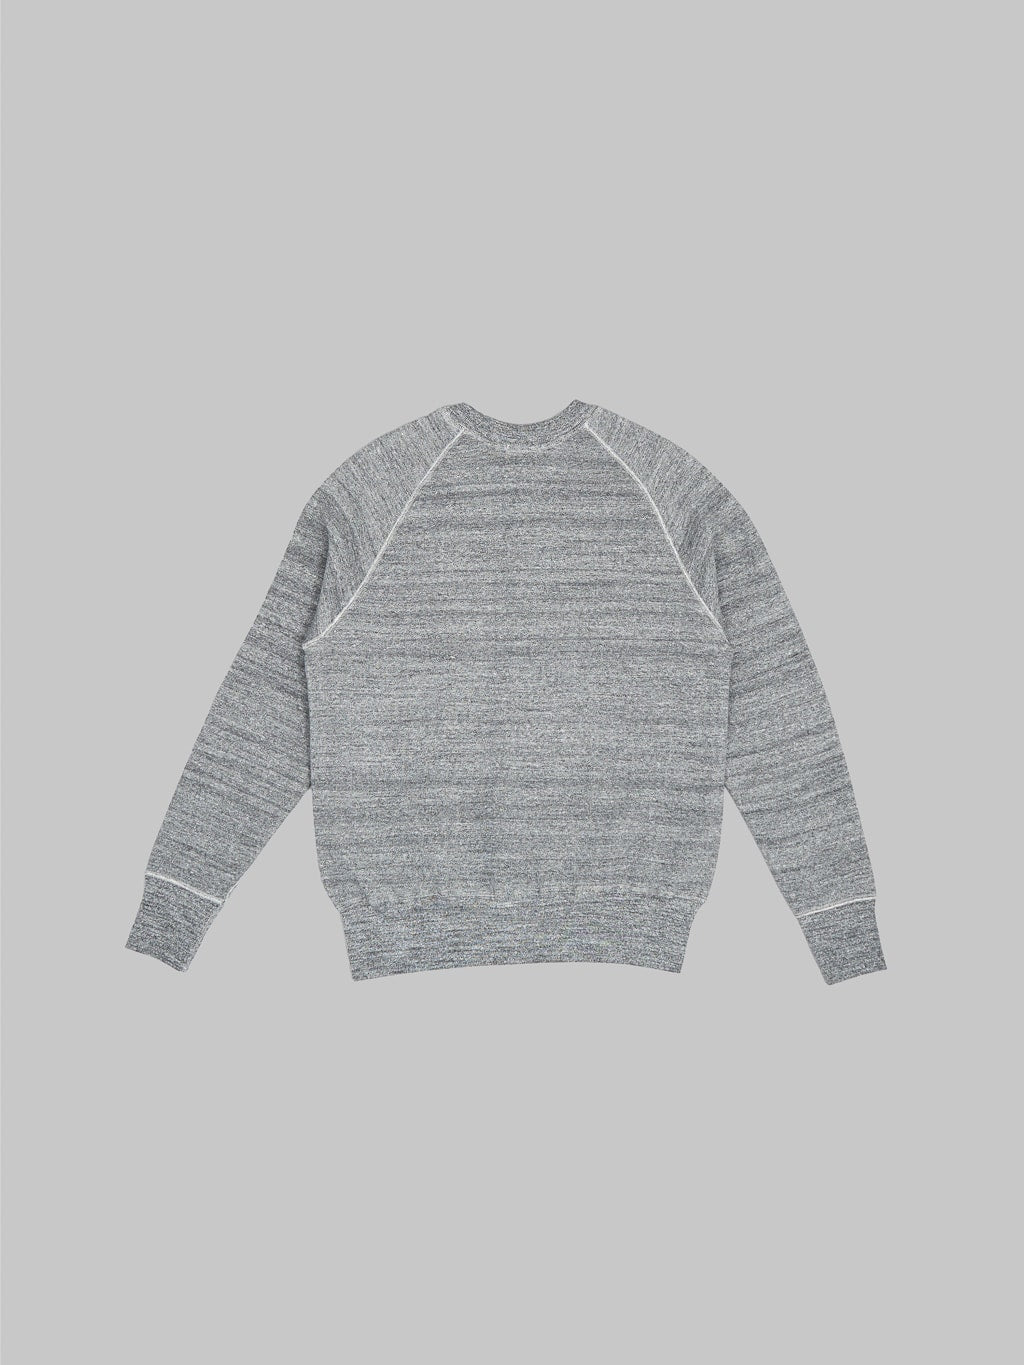 Denime By Warehouse & Co. "Lot. 261" 4-Needle Raglan Sweatshirt Dark Heather Grey